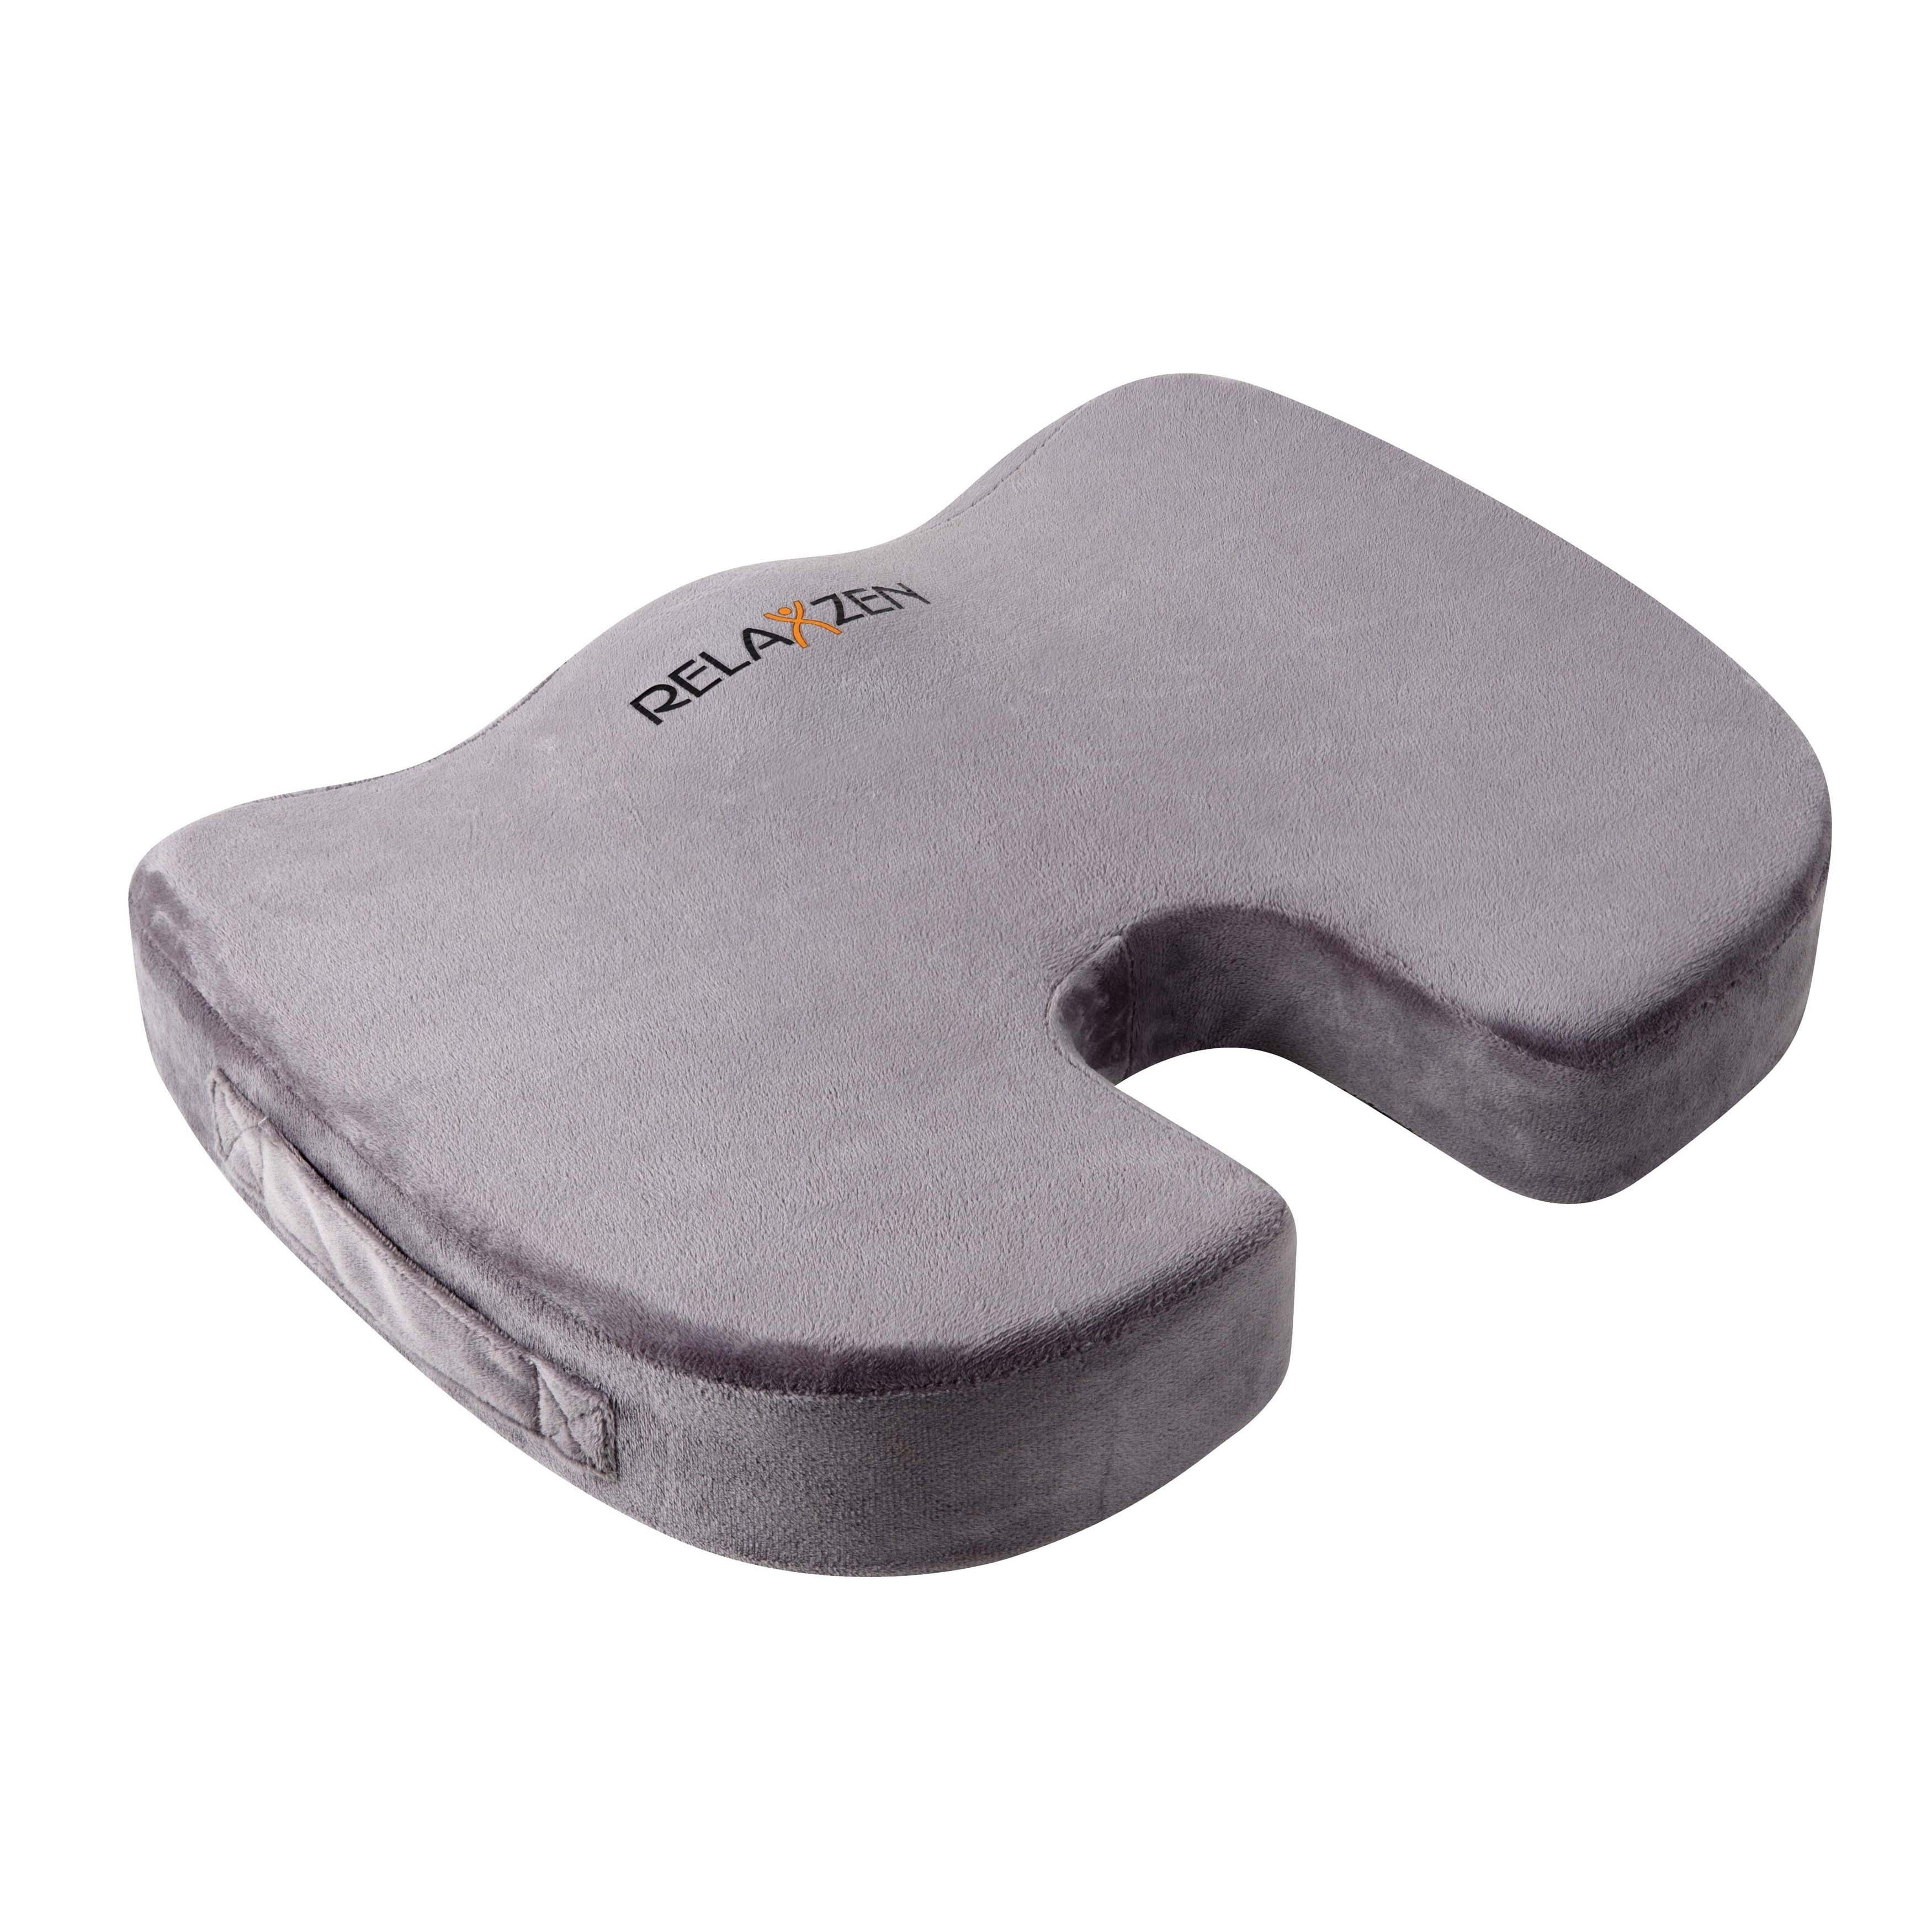 The Zen Pillow Lab - Zen Comfort Gel Seat Cushion